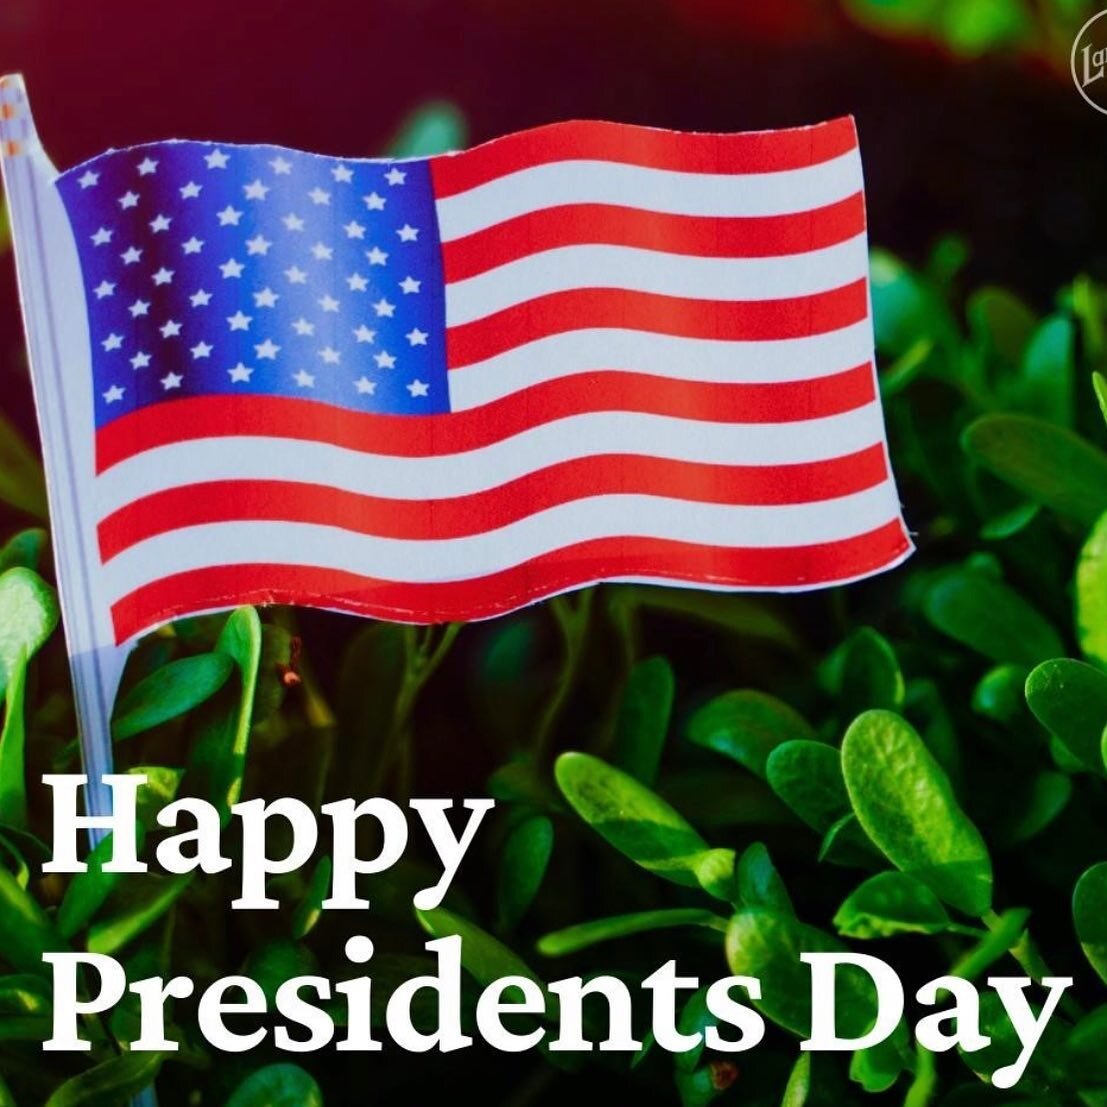 Happy Presidents Day!
.
.
.
#presidentsday #president #commanderandchief #commander #topdogphoto